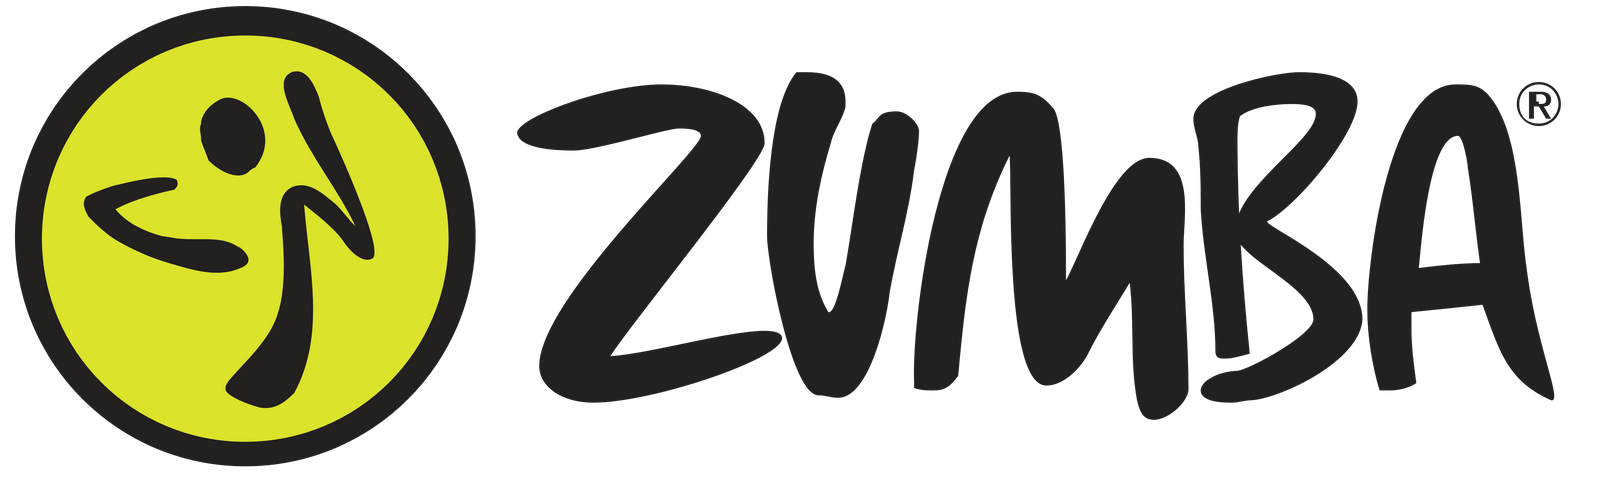 Logo Zumba Fitness official